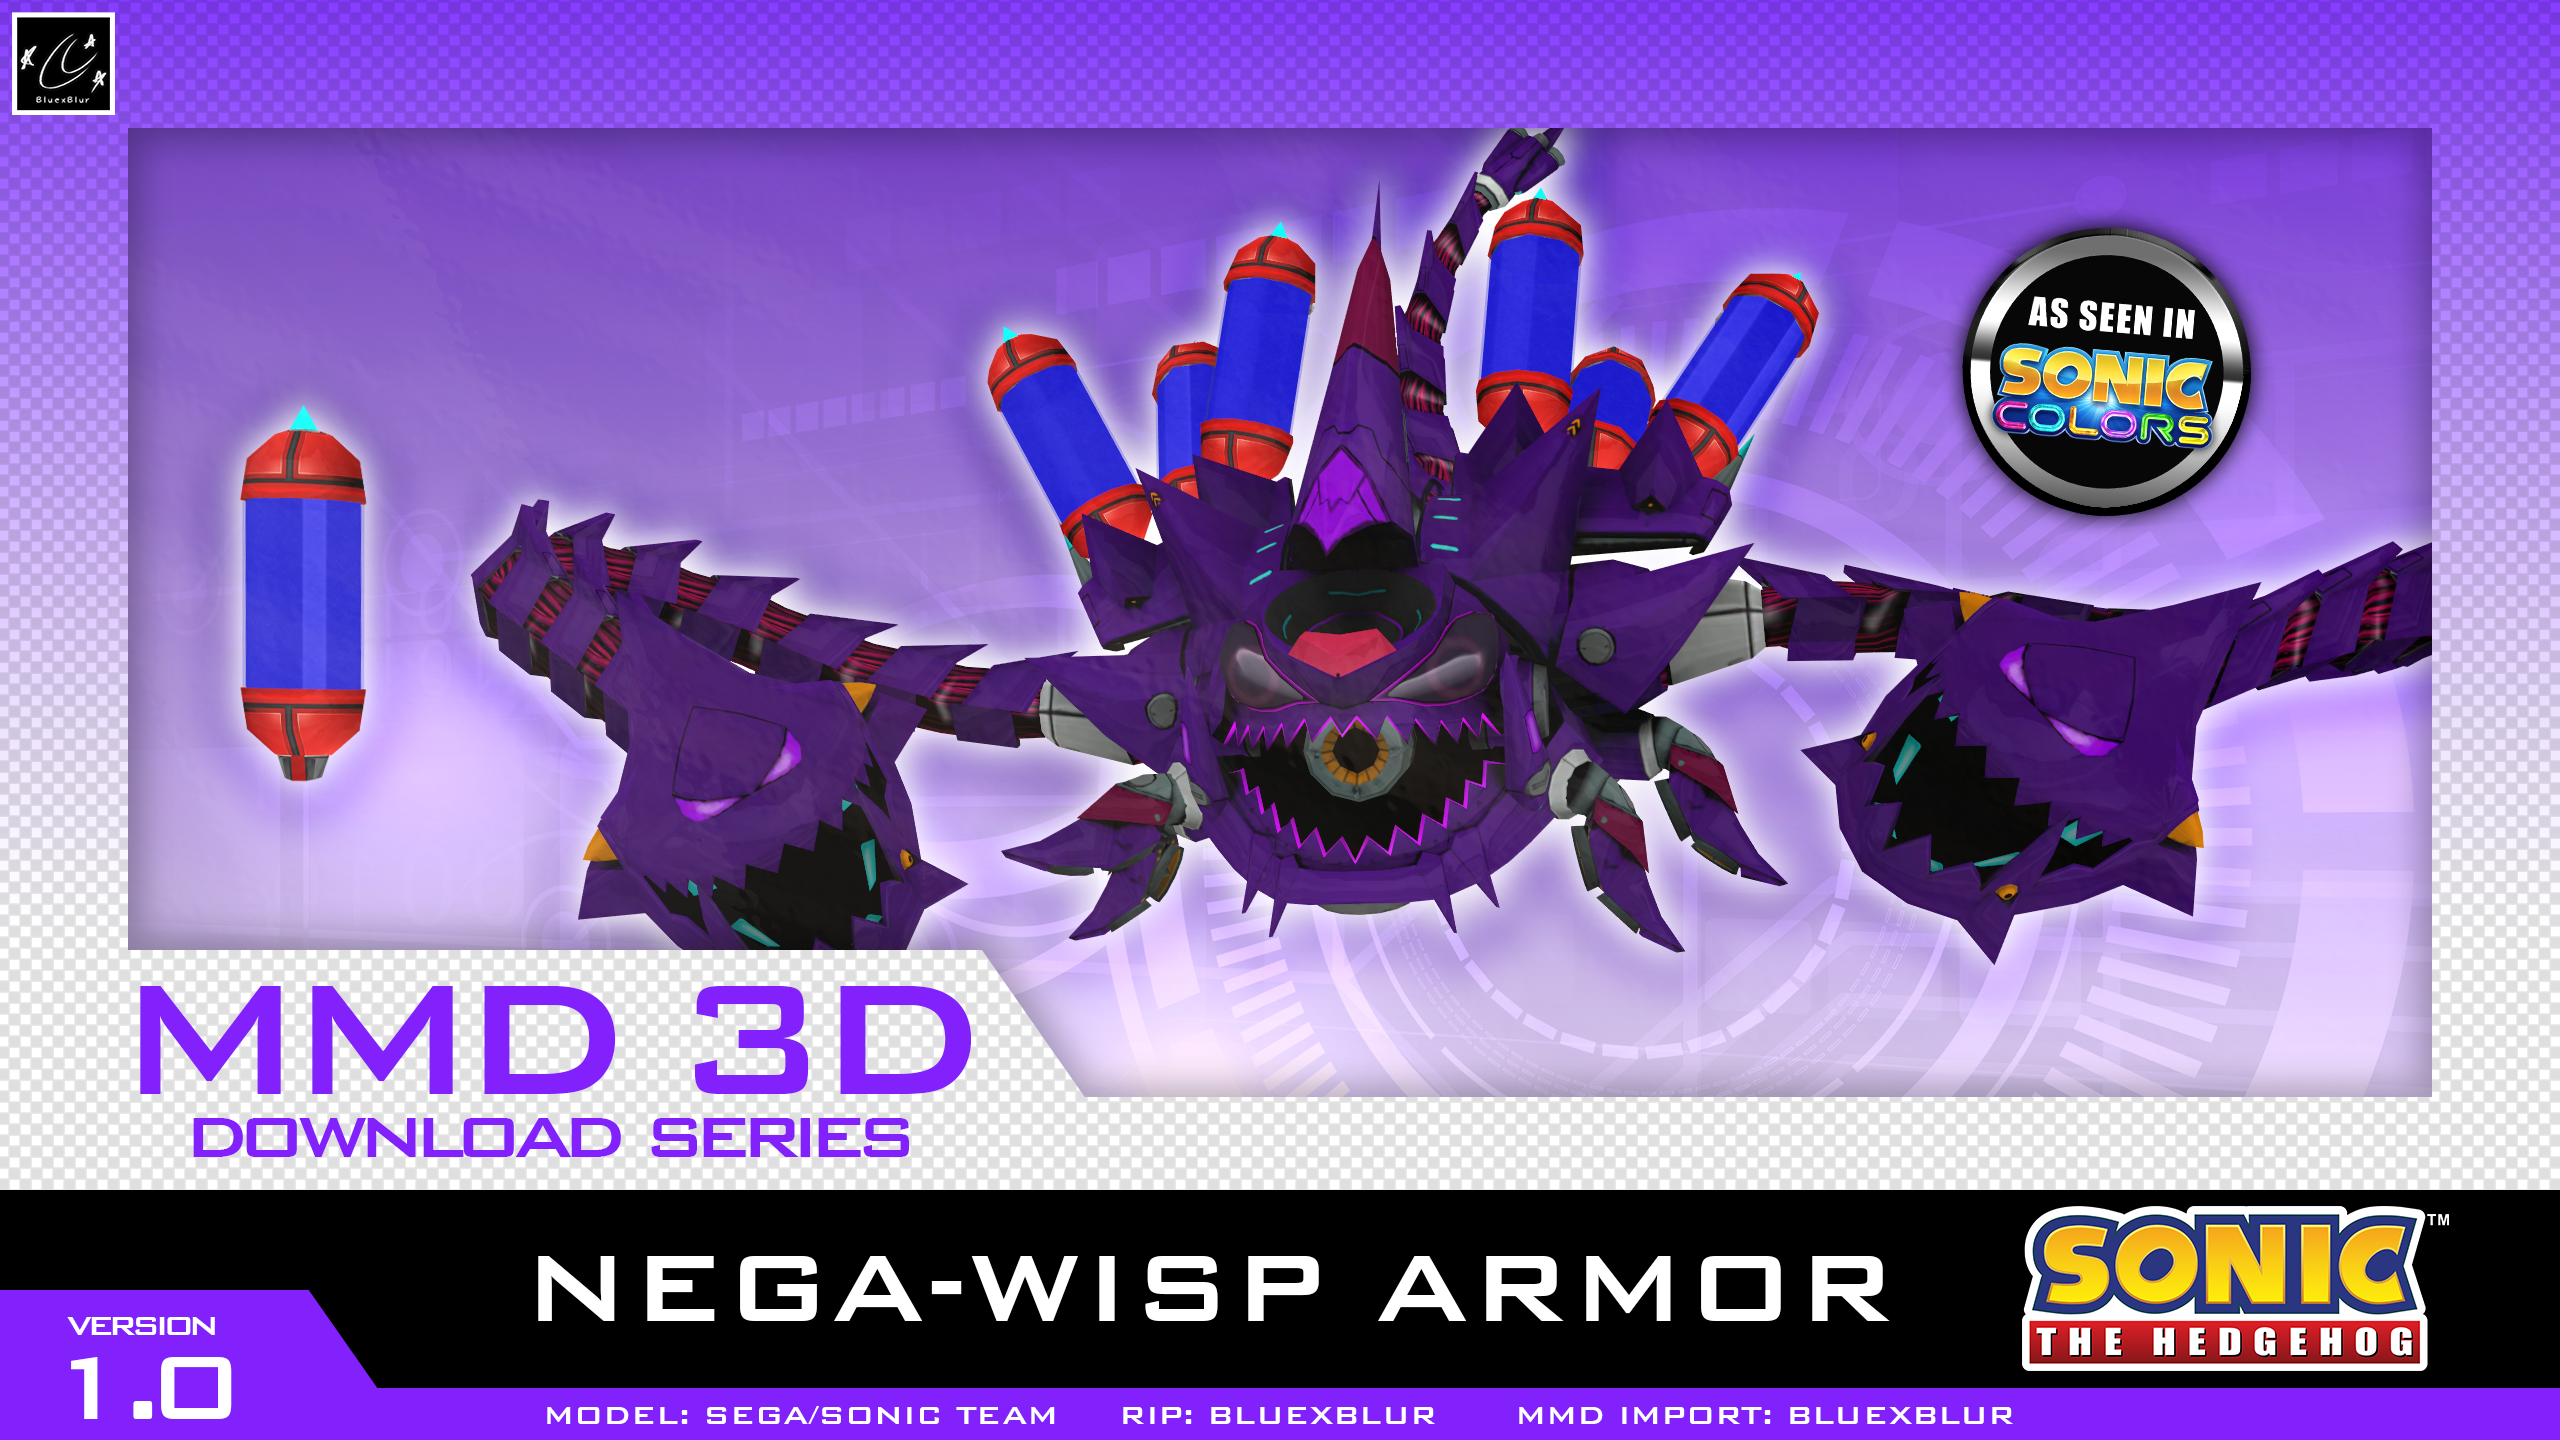 DS / DSi - Sonic Colors - Nega-Wisp Armor - The Models Resource